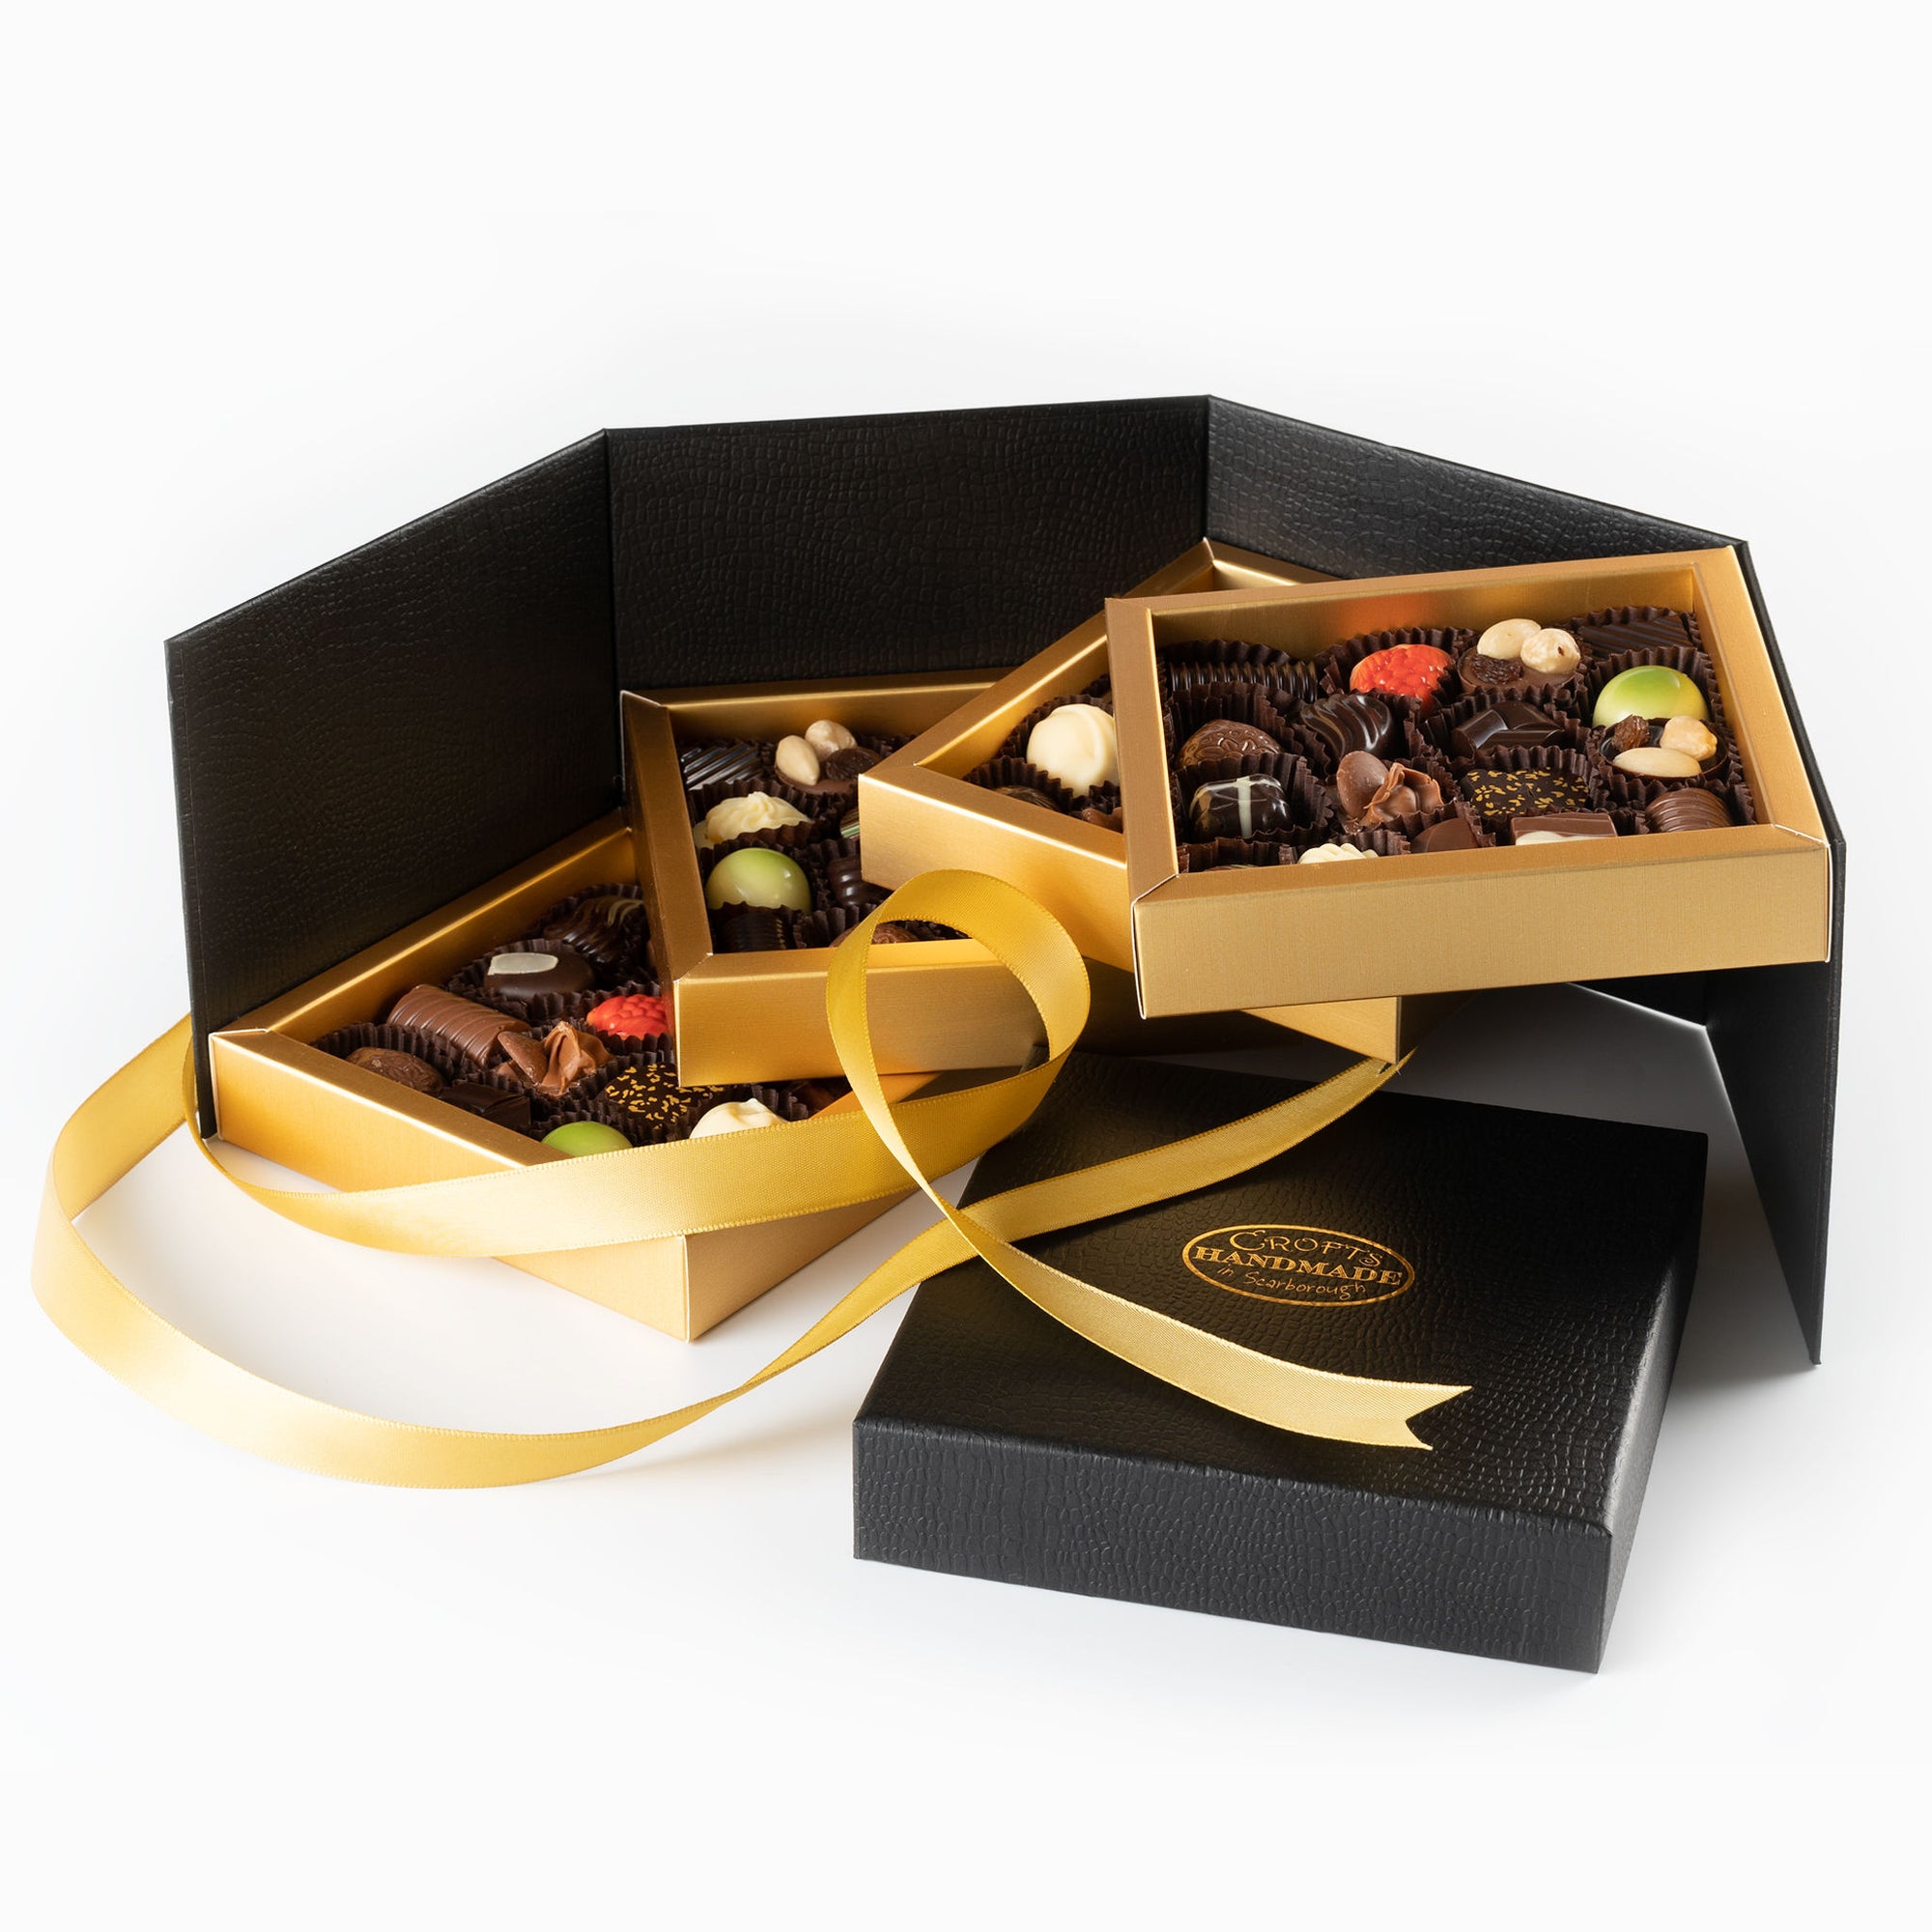 Premium box of 64 chocolates - choose your own